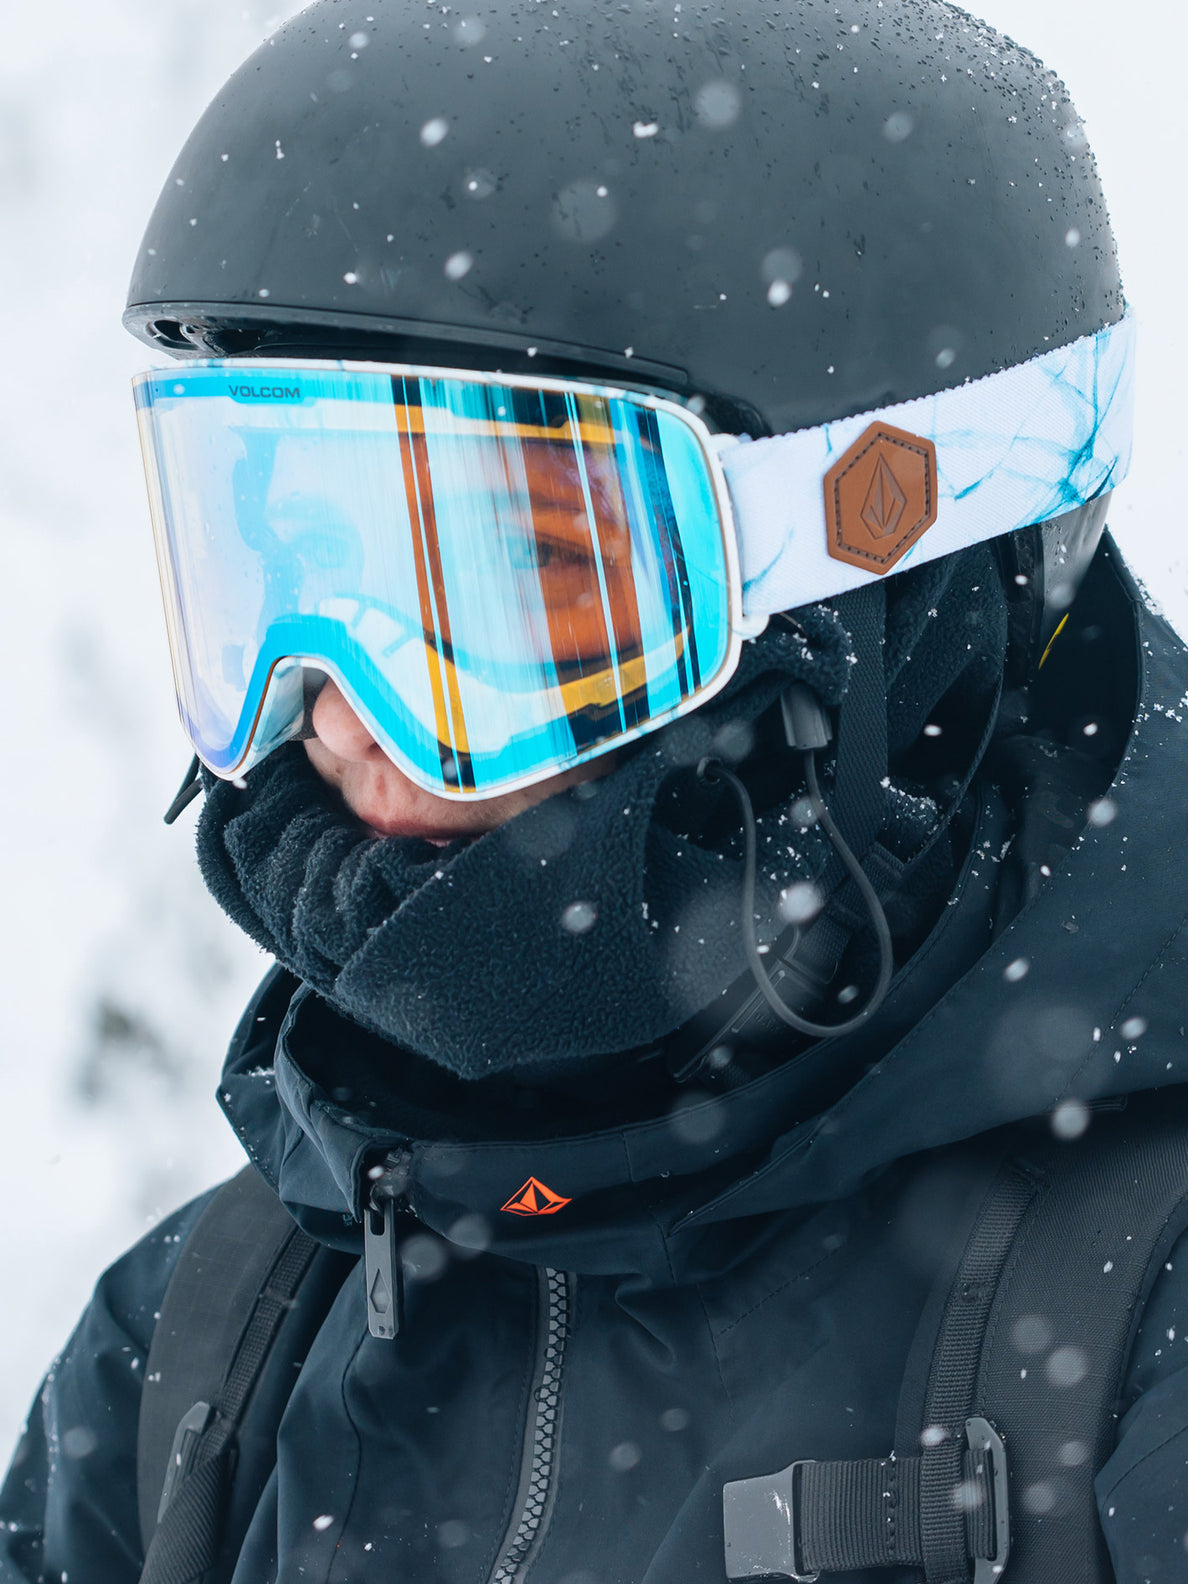 Volcom Odyssey Snowboard Goggles - White Ice / Ice Chrome + Bonus Dark Grey Lens